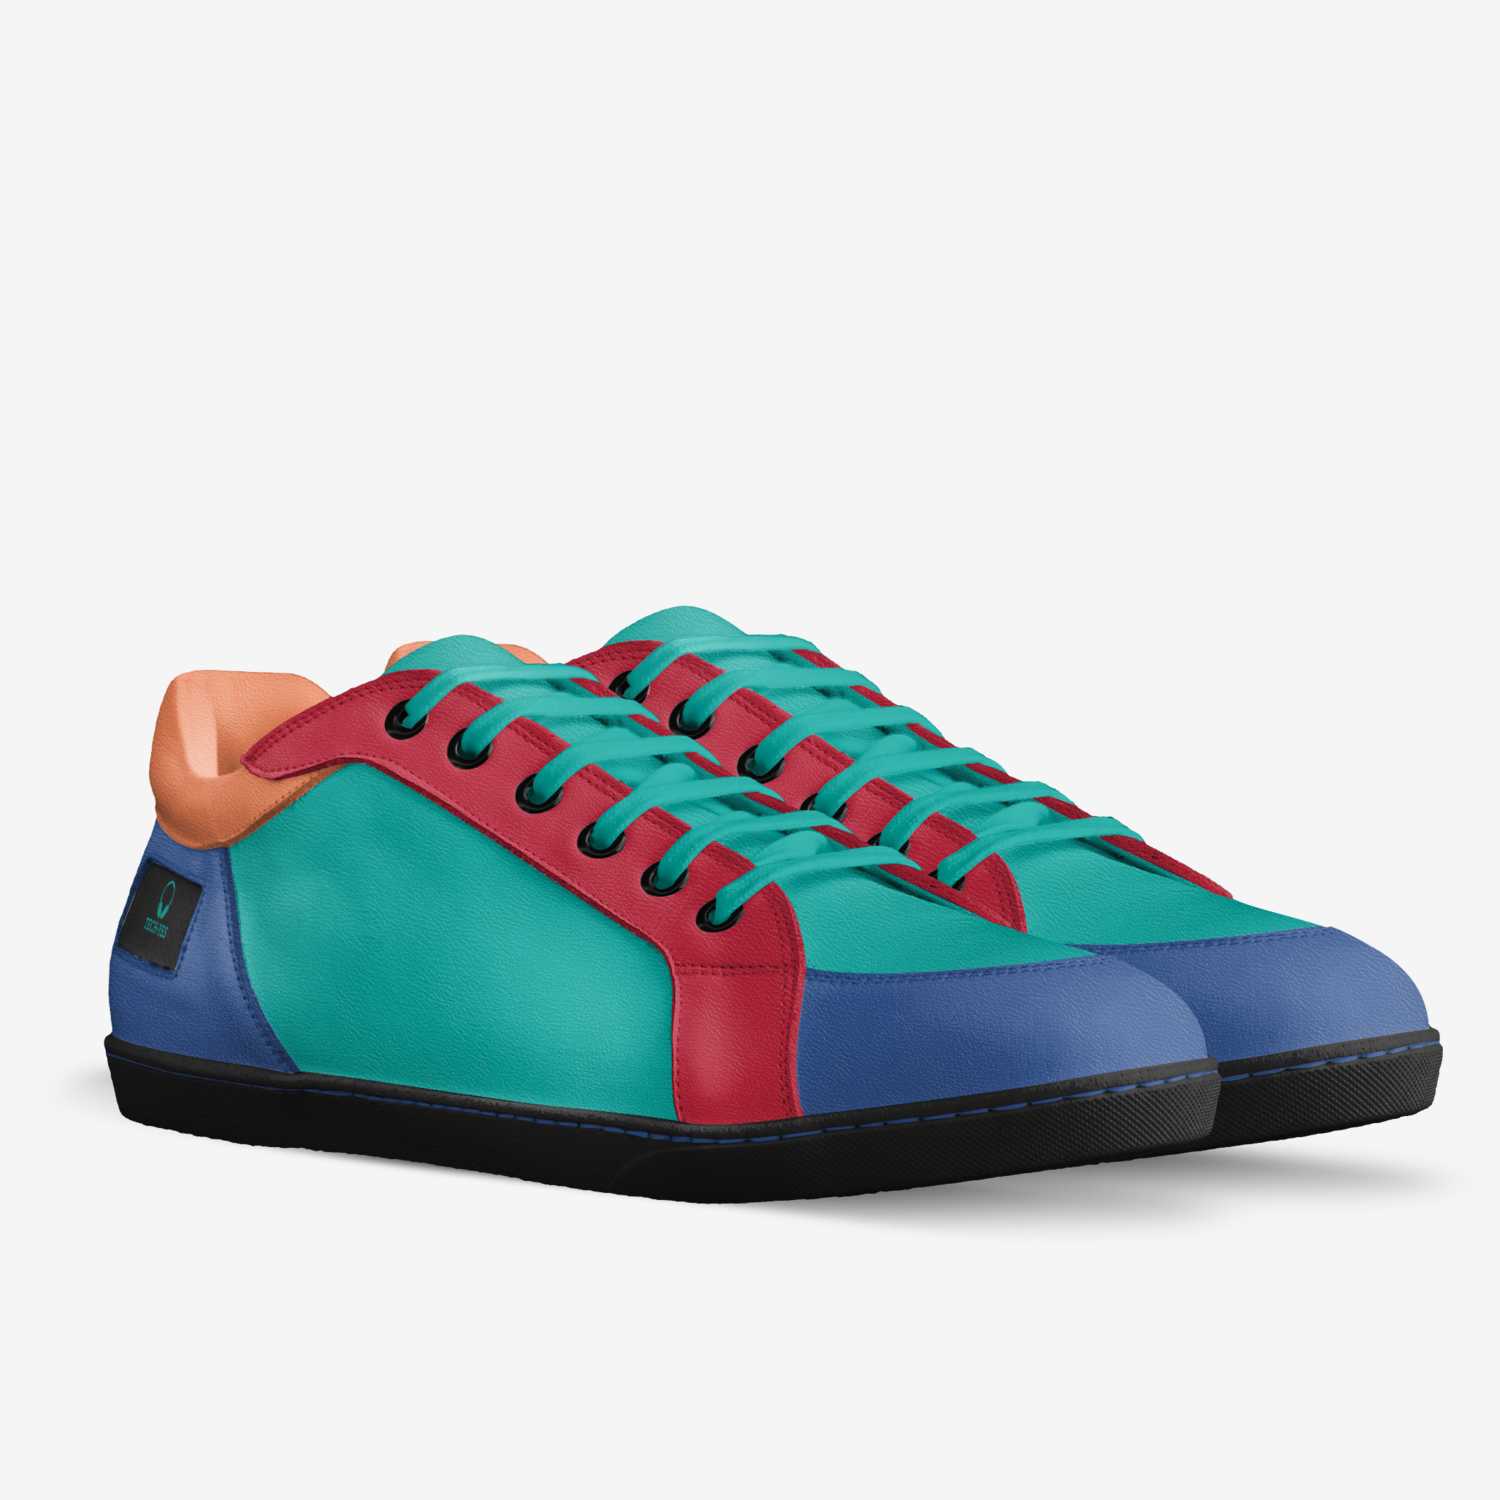 Techno Shoes | A Custom Shoe concept by Arthur Caulfield